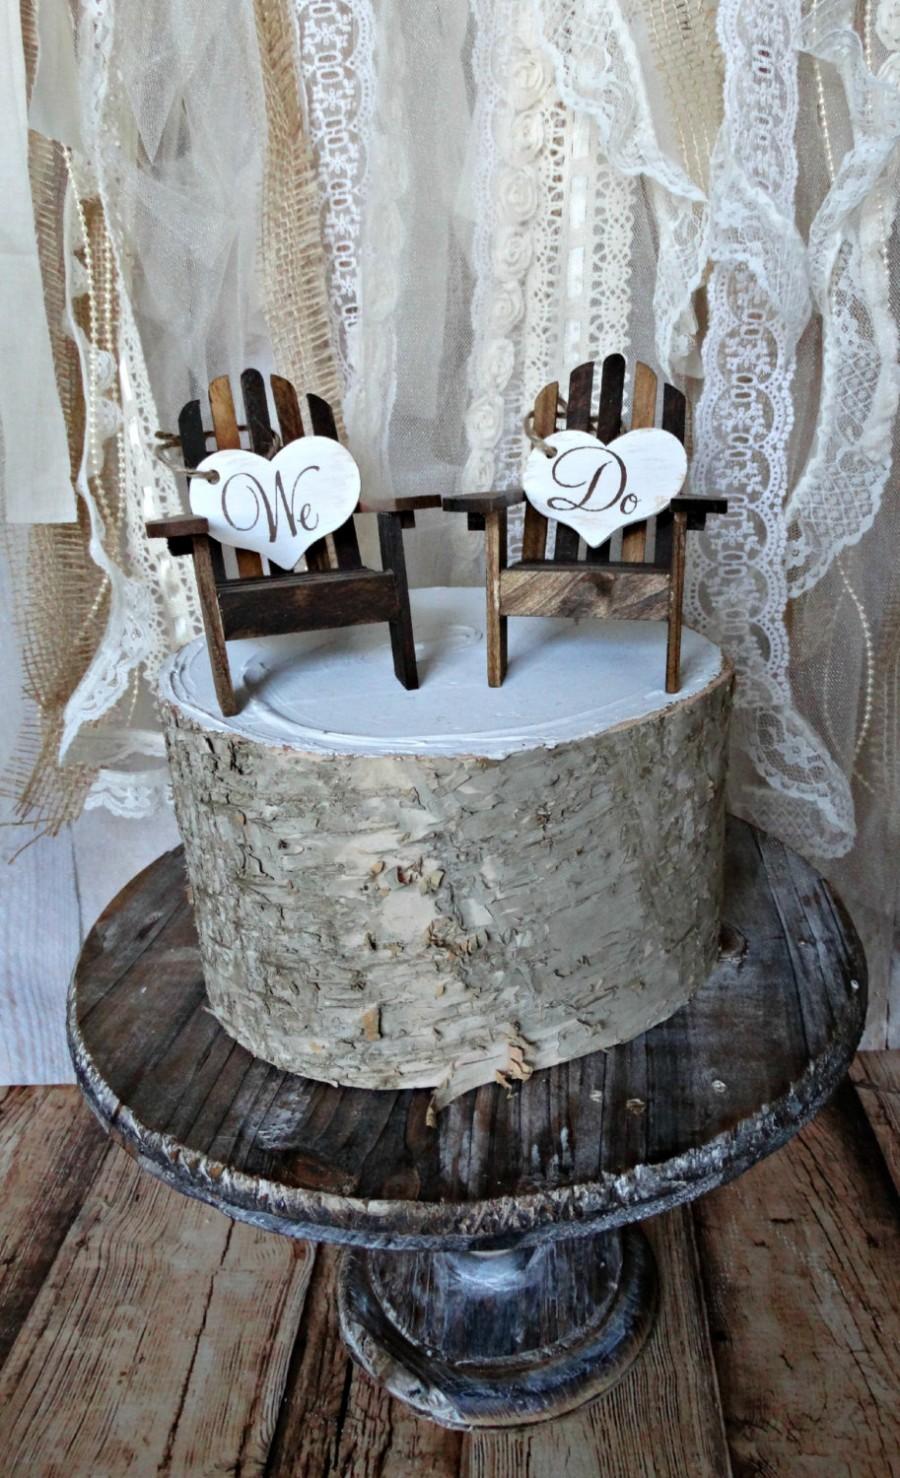 Wedding - Adirondack-chairs-nautical-wedding-cake topper-miniature-destination-wedding keepsake-beach-bride- groom-Mr.and Mrs.-lake house-rustic